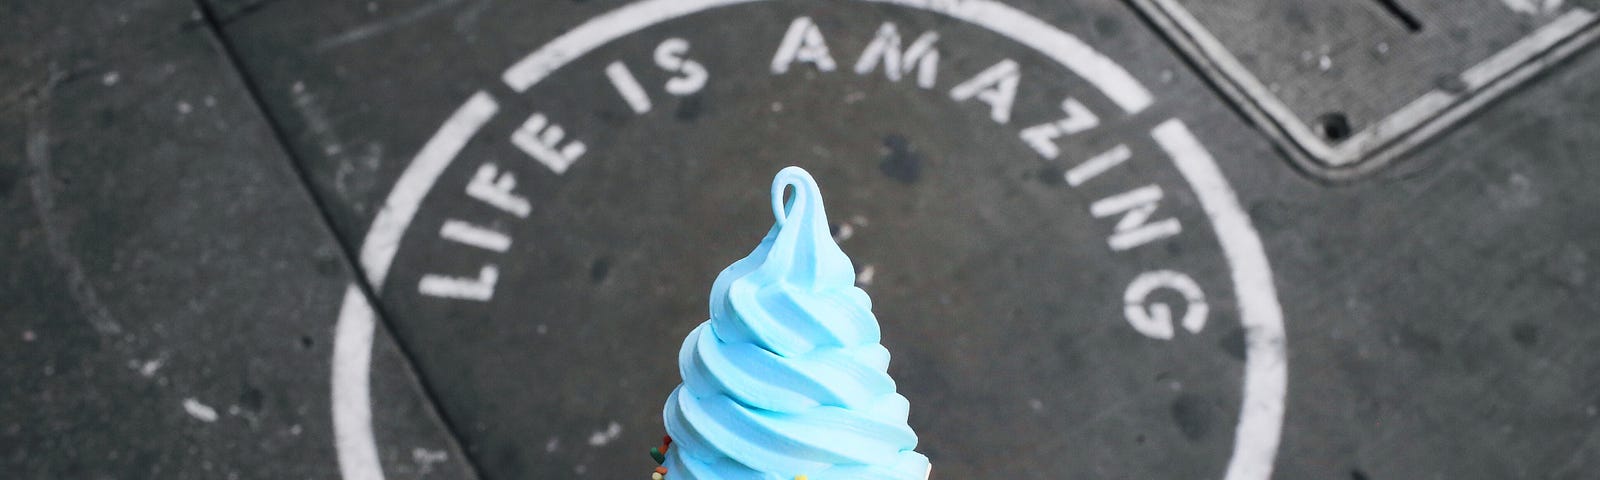 ice cream cone beside the words Life is amazing